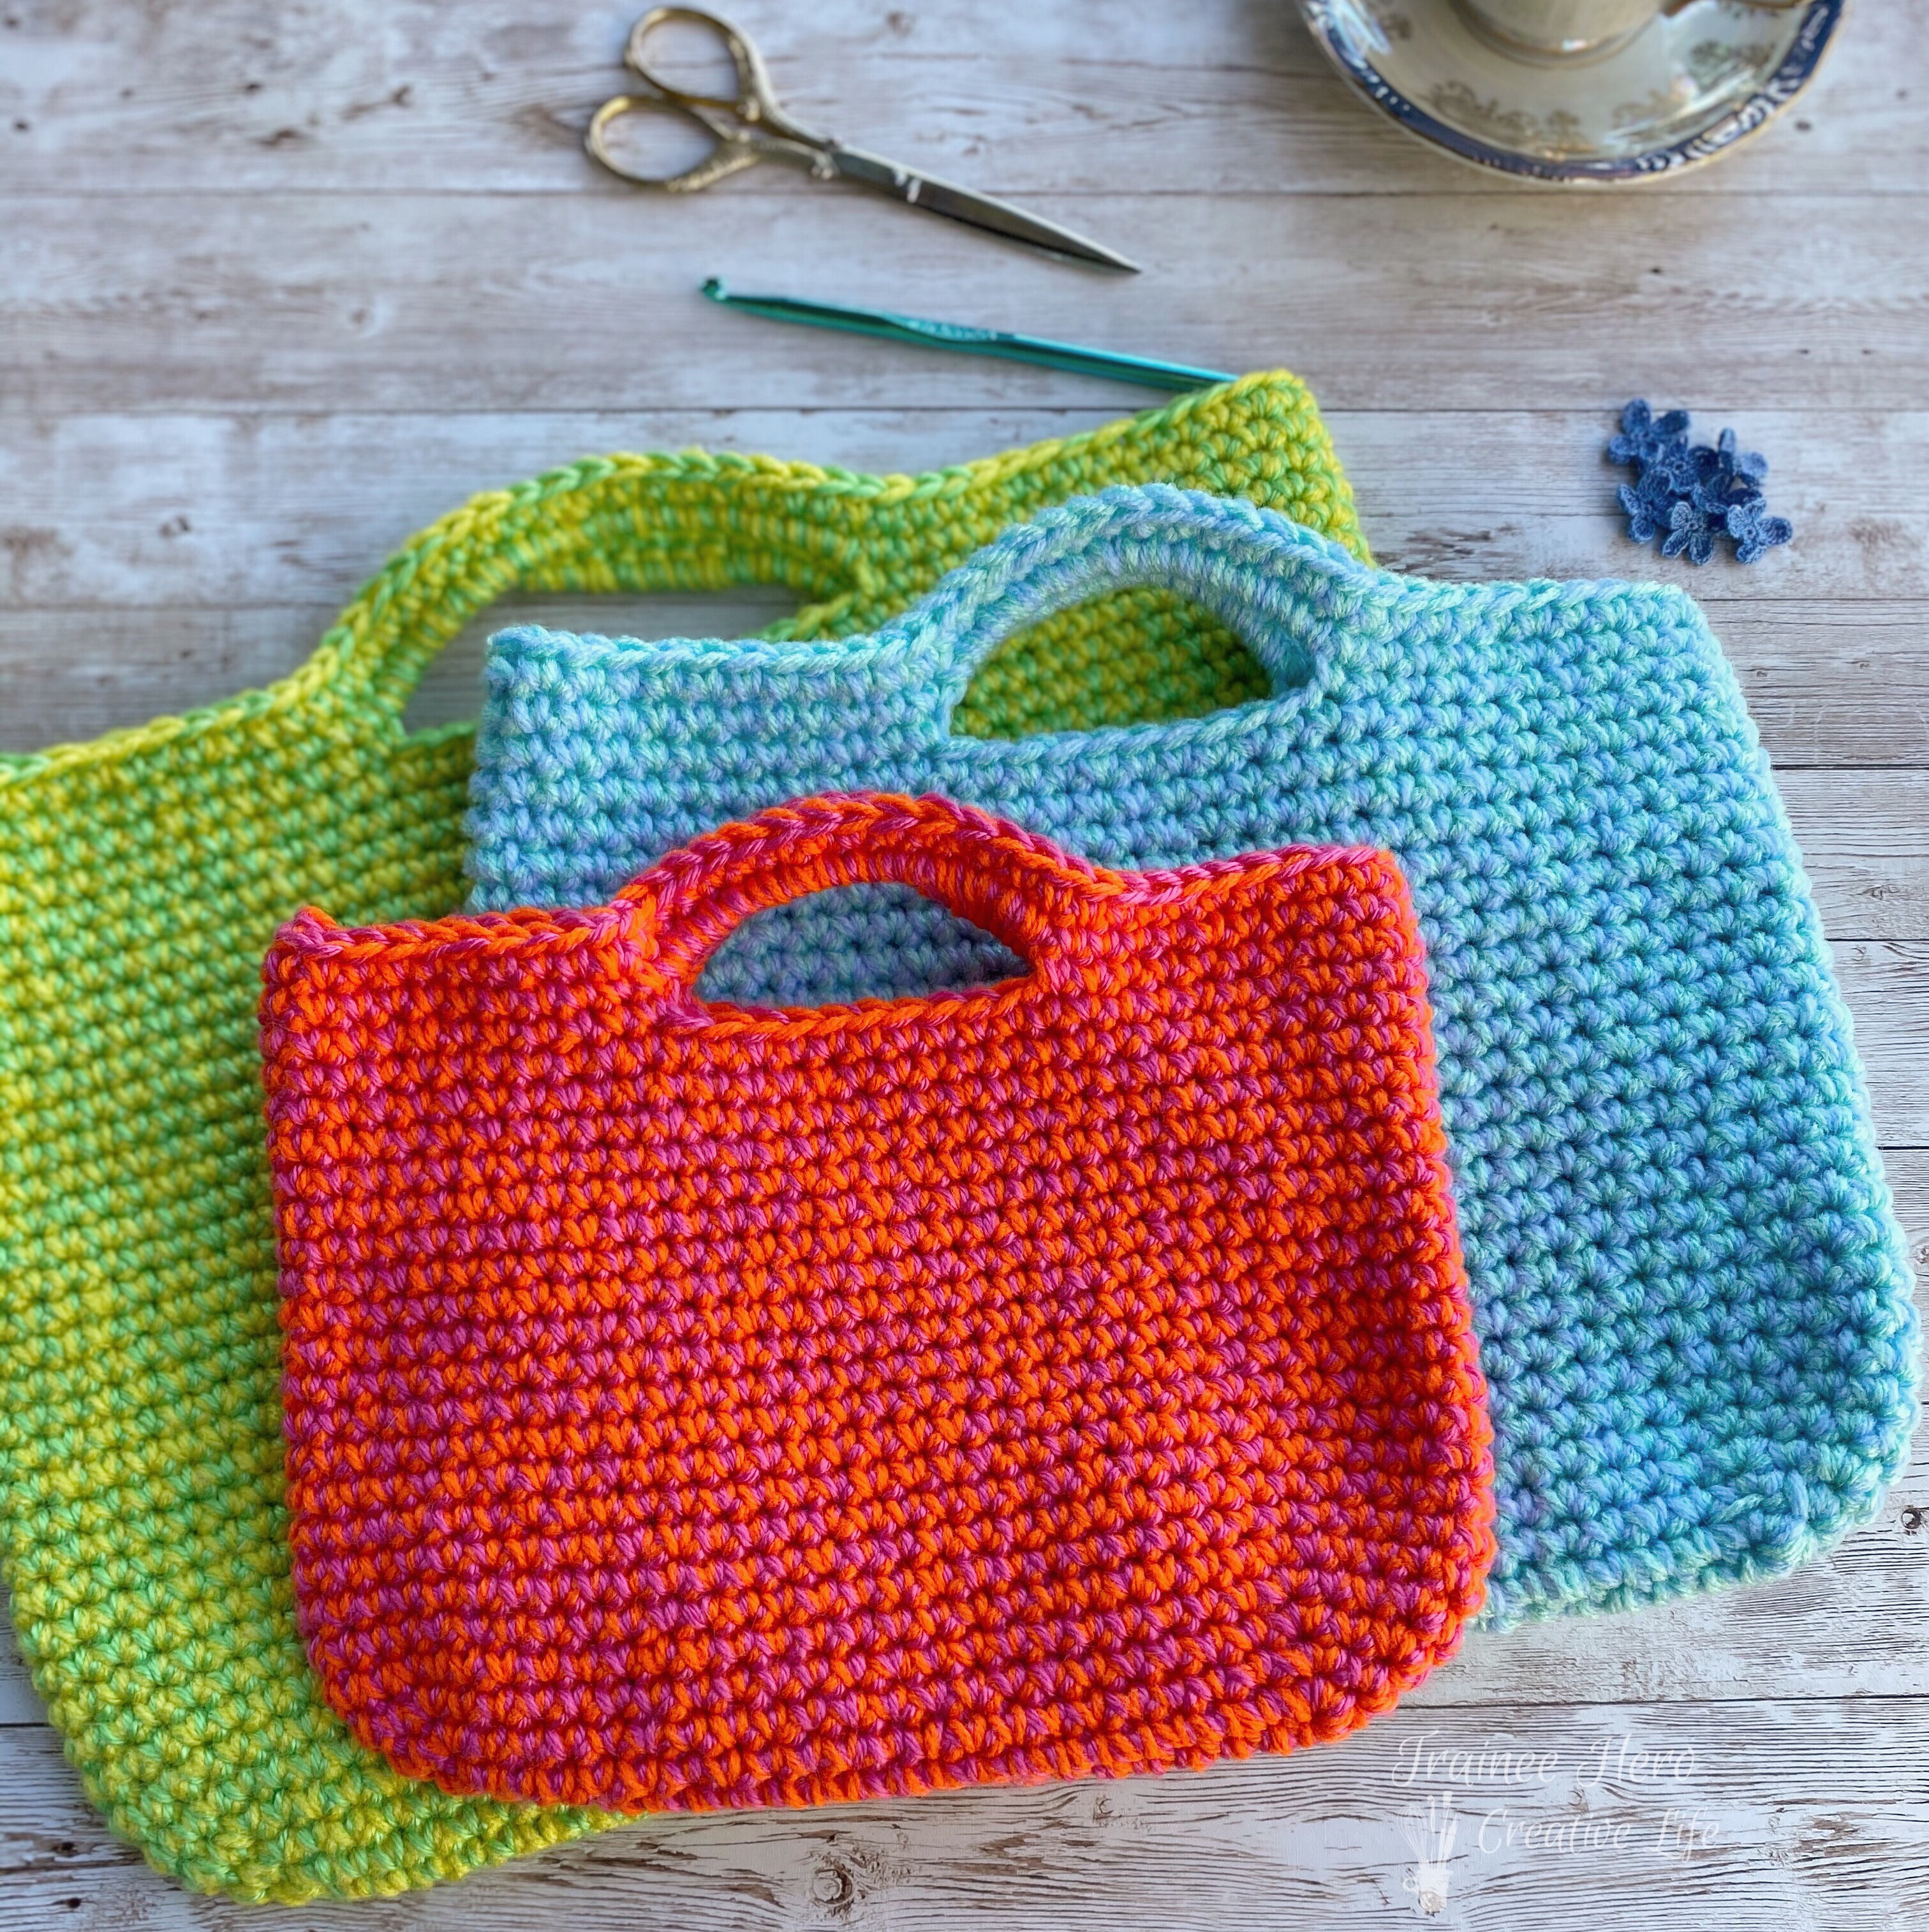 Three crochet project bags.